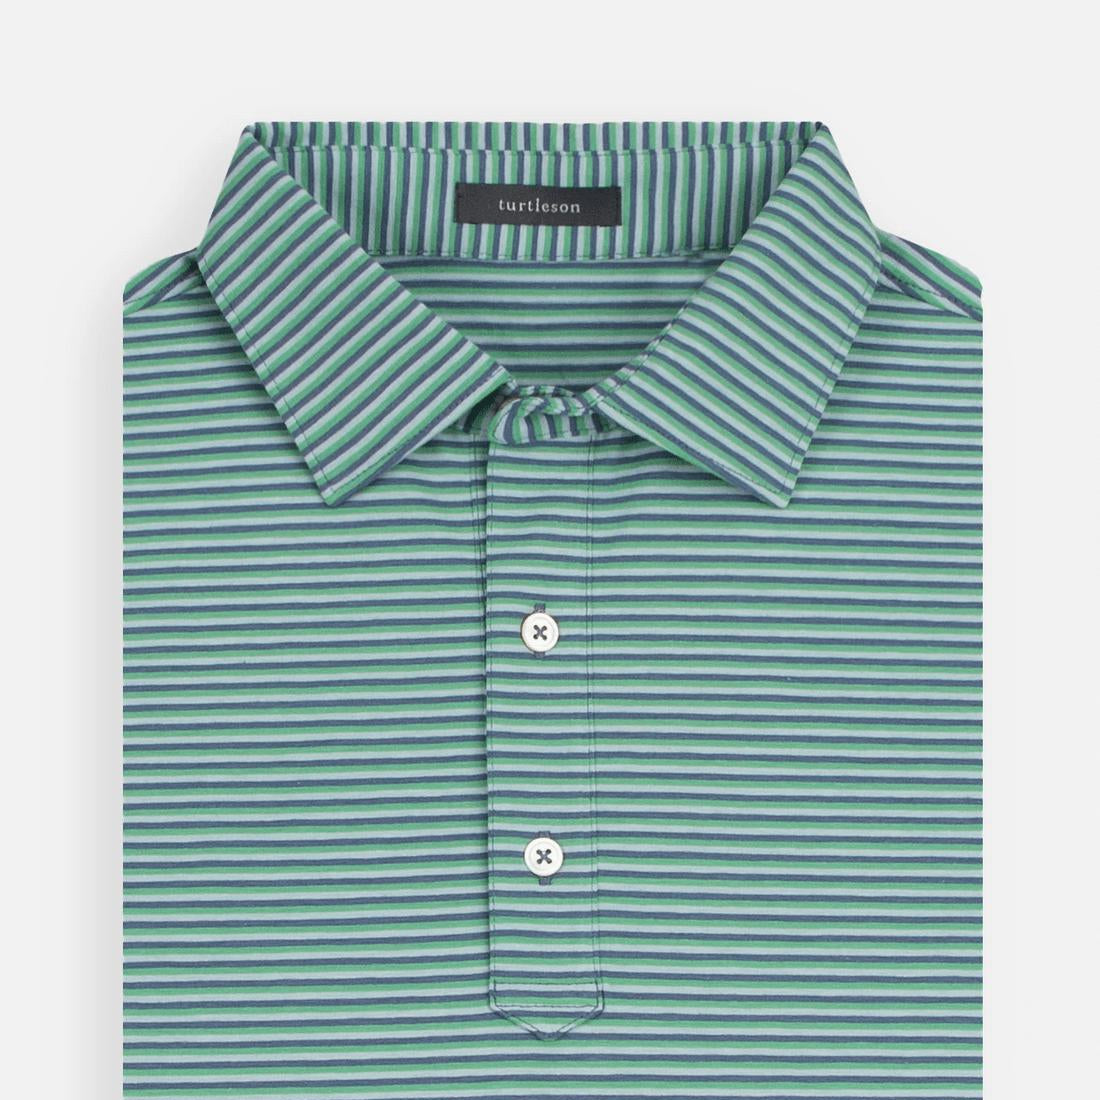 Turtleson Men's Shirts Lagoon/Denim / Med Jack Stripe Cotton Polo